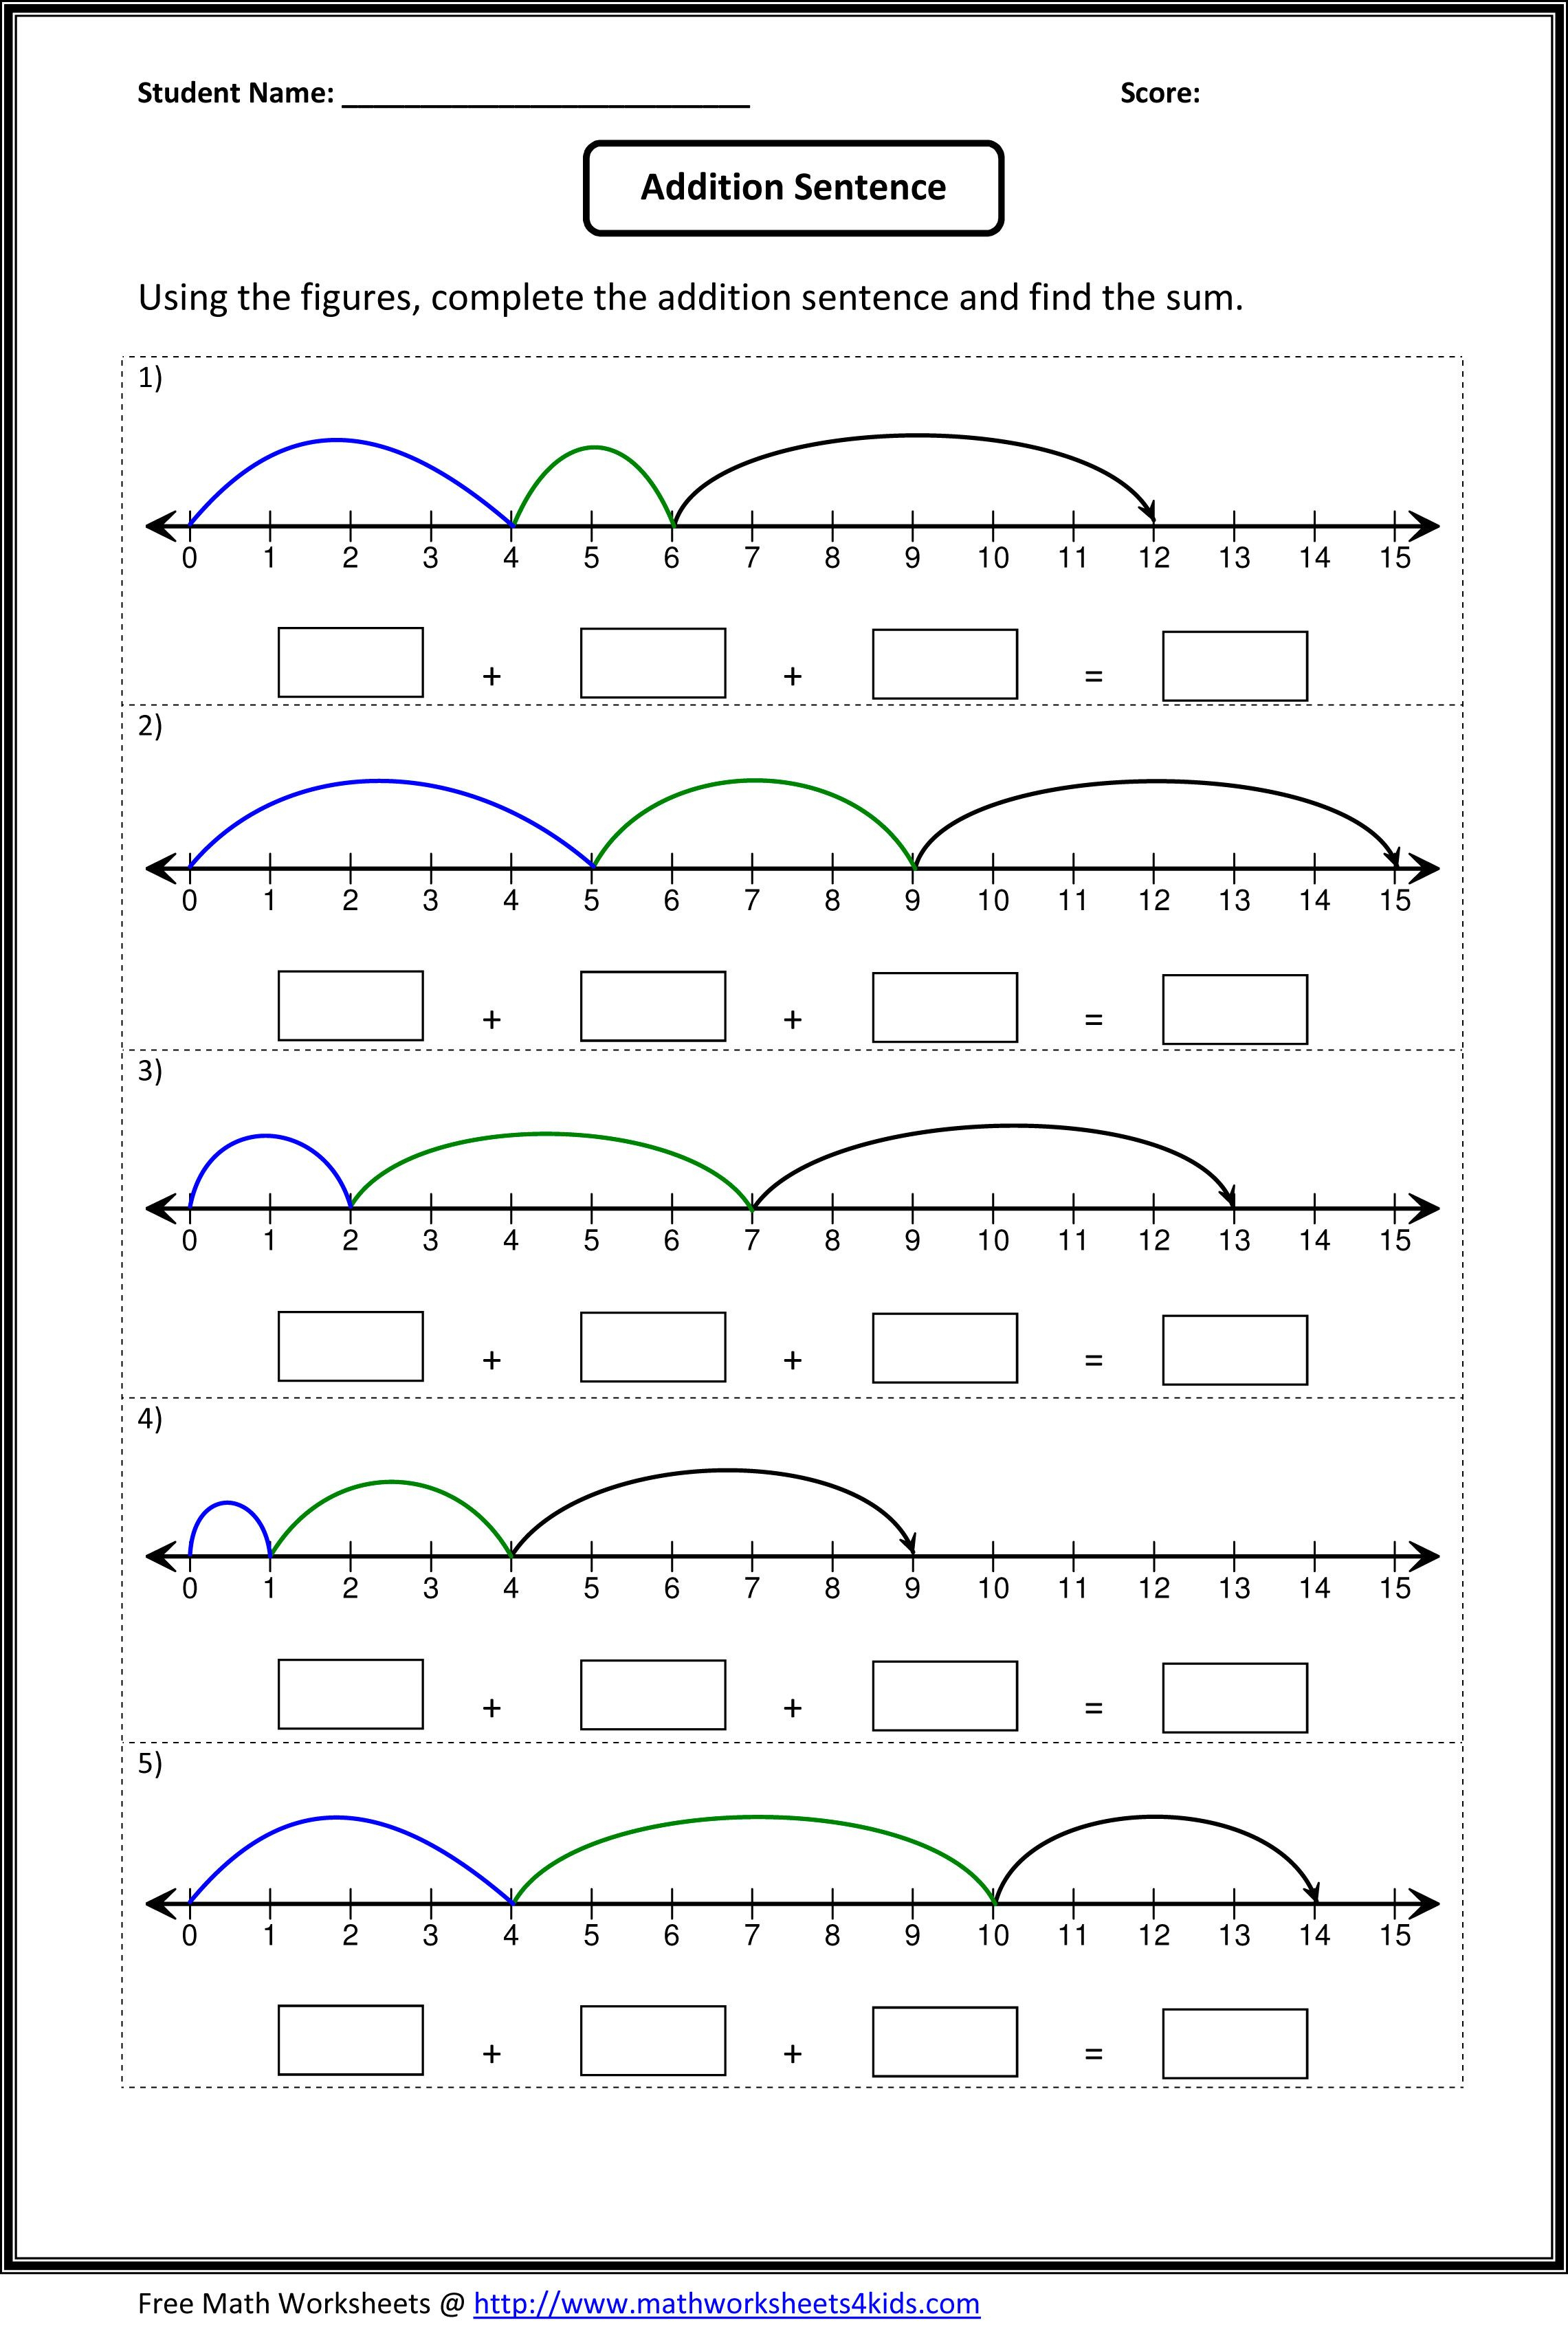 Number Line Worksheets 2Nd Grade To Print - Math Worksheet For Kids - Free Printable Number Line Worksheets